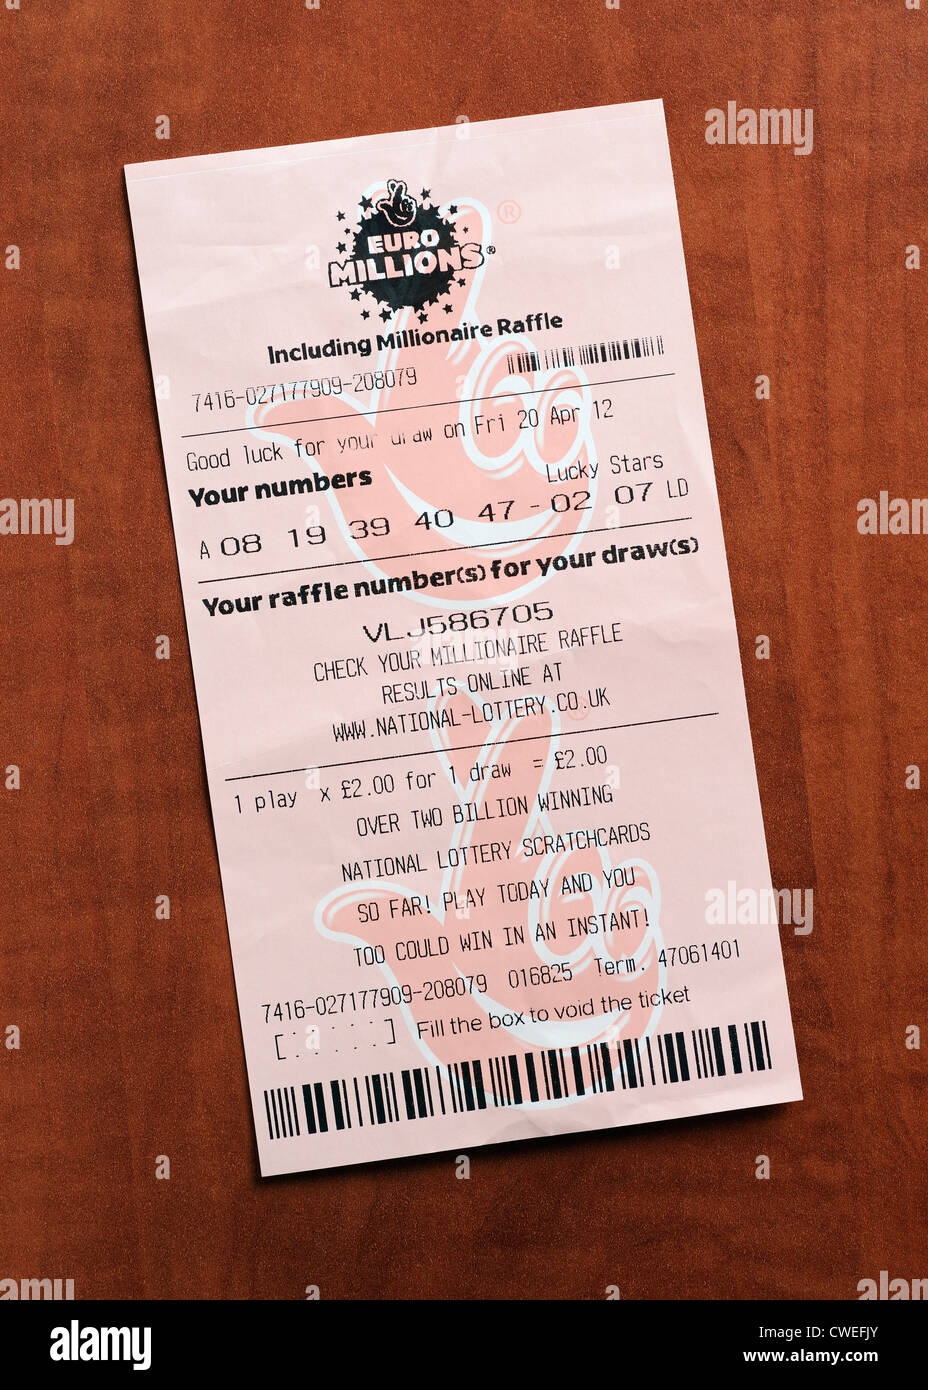 euro-millions-lottery-ticket-uk-CWEFJY.j